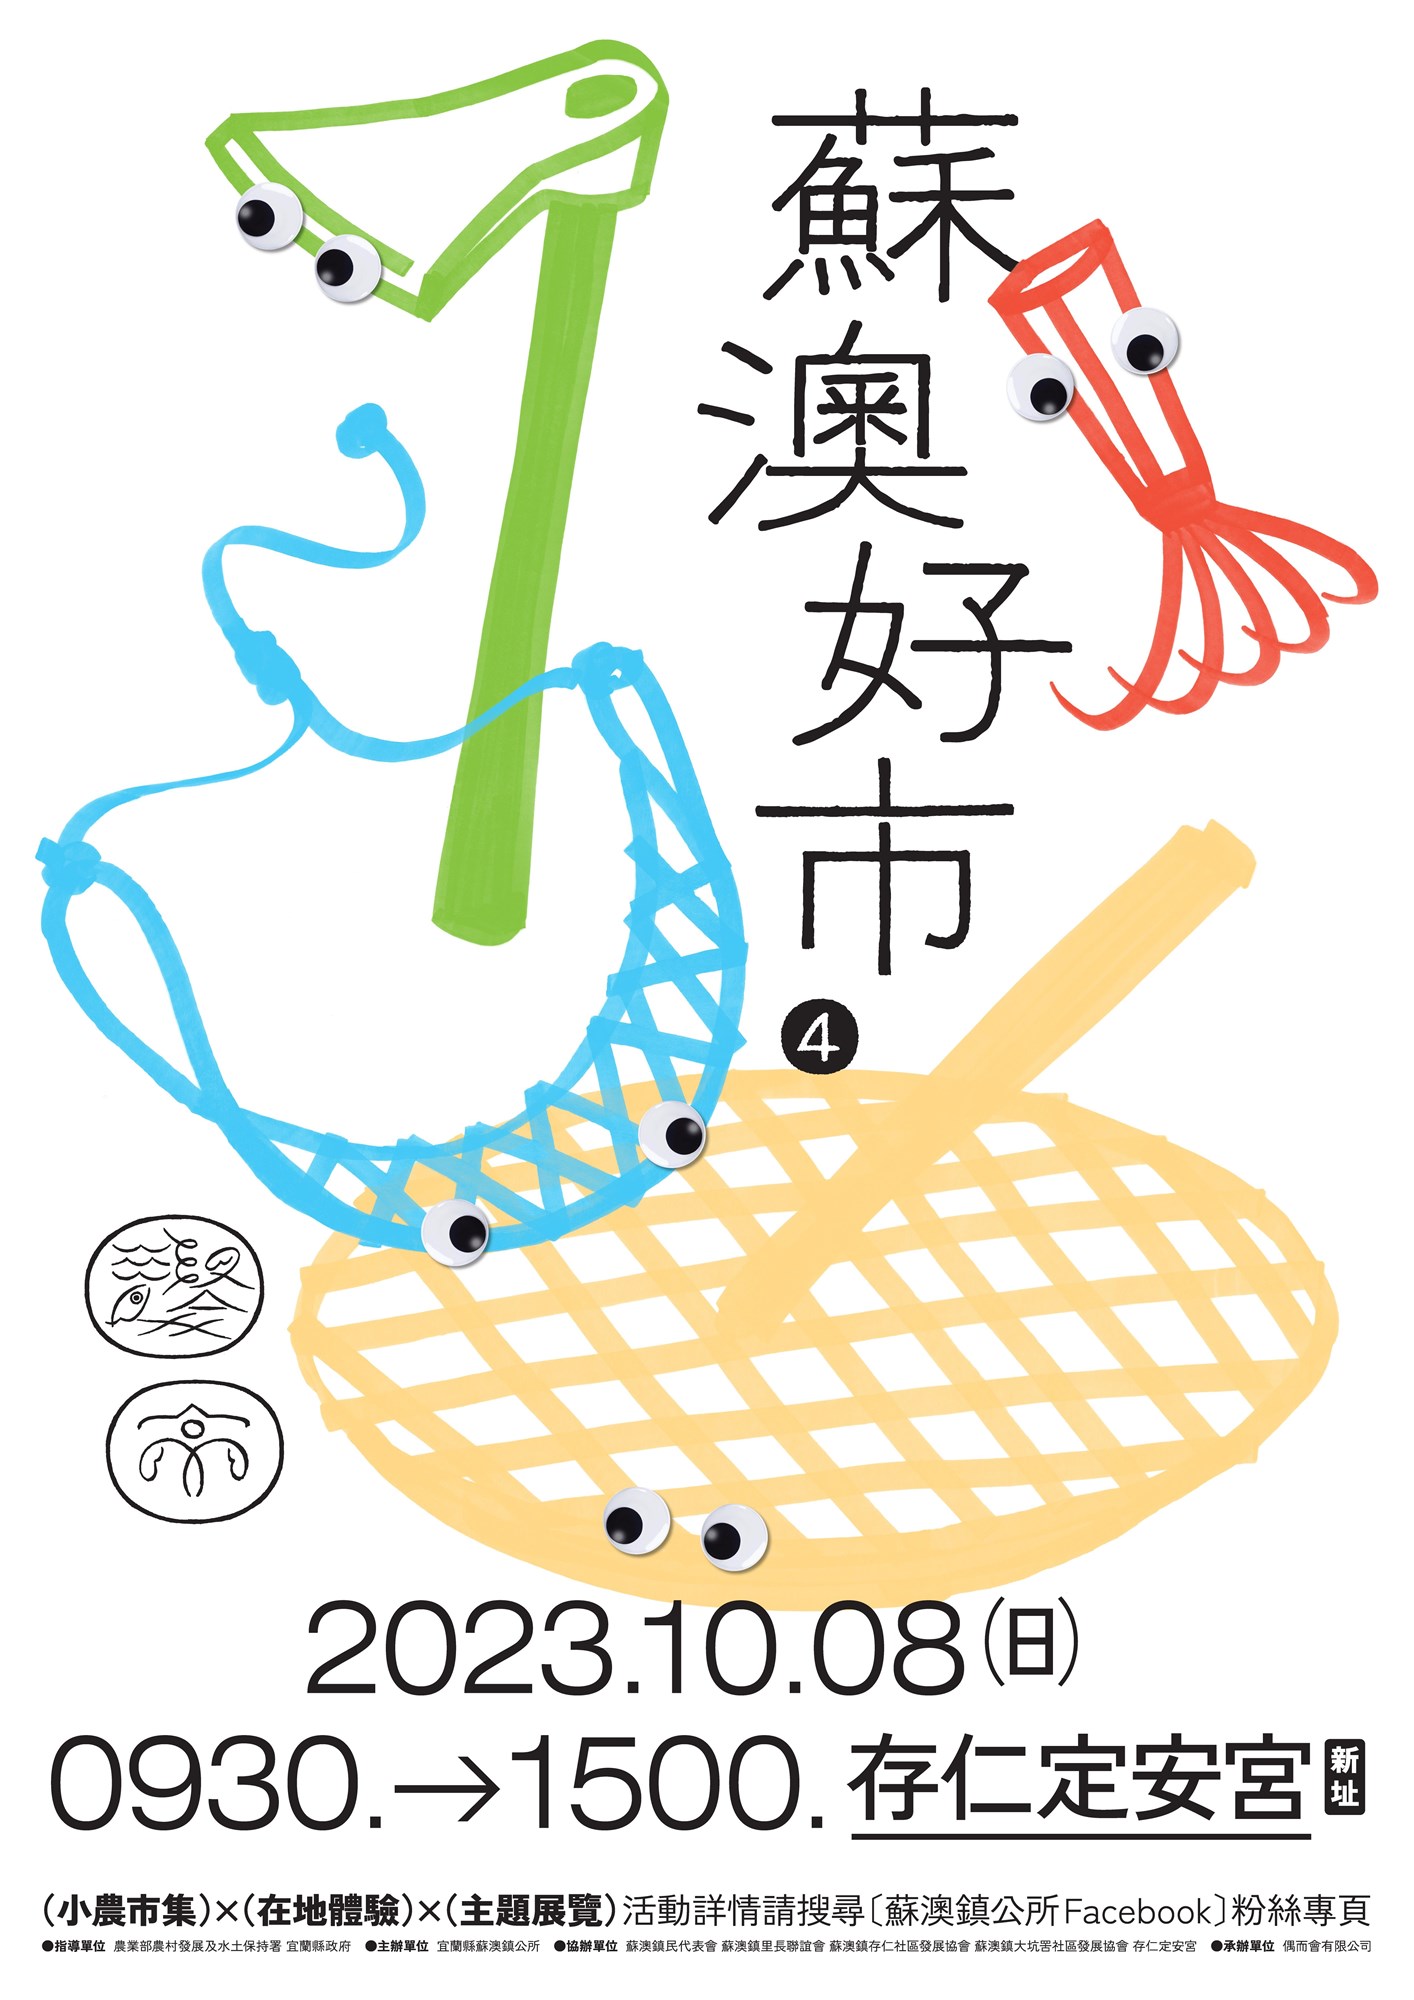 Плакат о мероприятии на хорошем рынке Суао